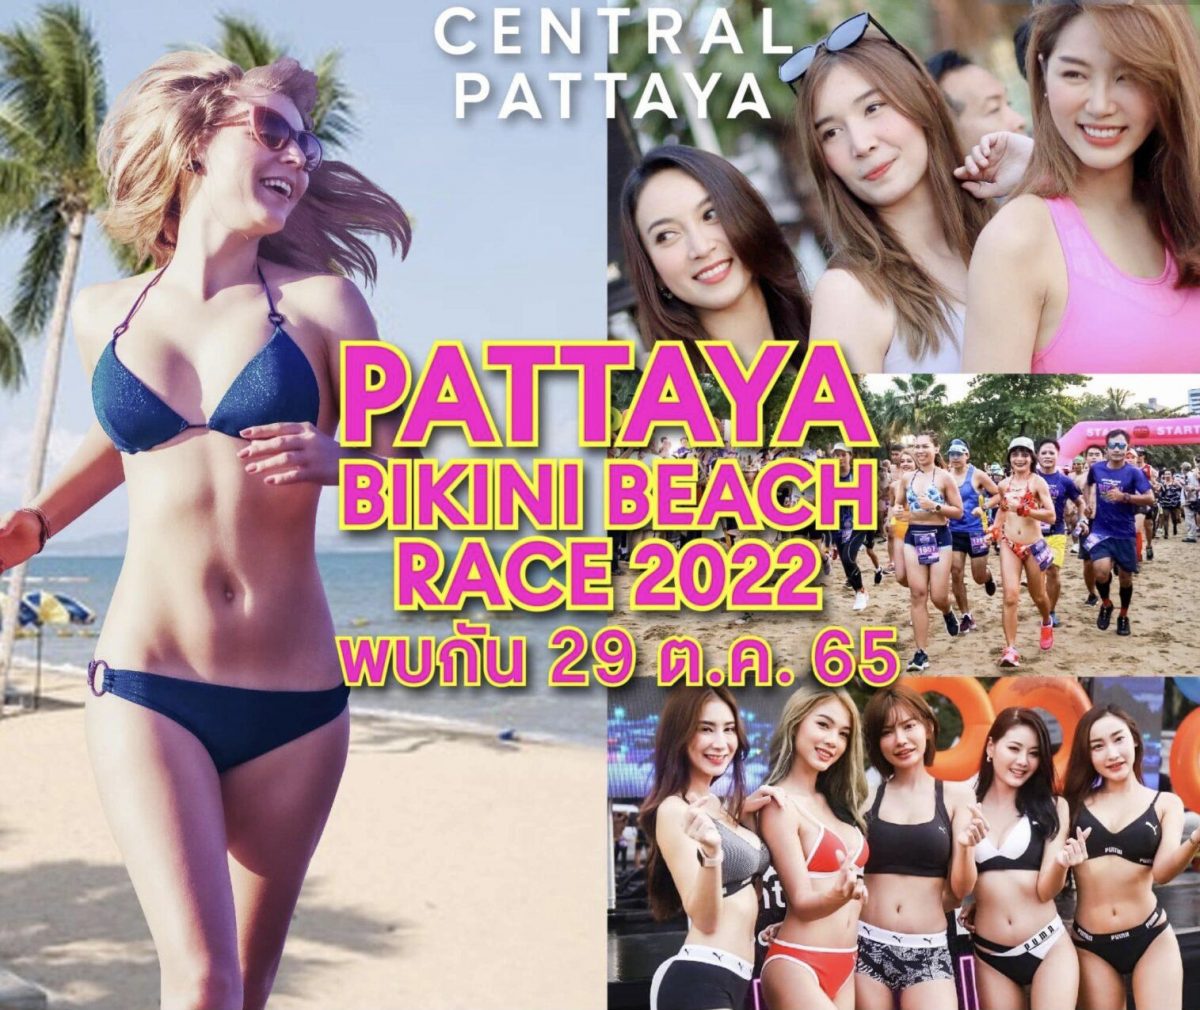 Pattaya organiseert op 29 oktober van dit jaar weer de niets omhullende Bikini Beach Race